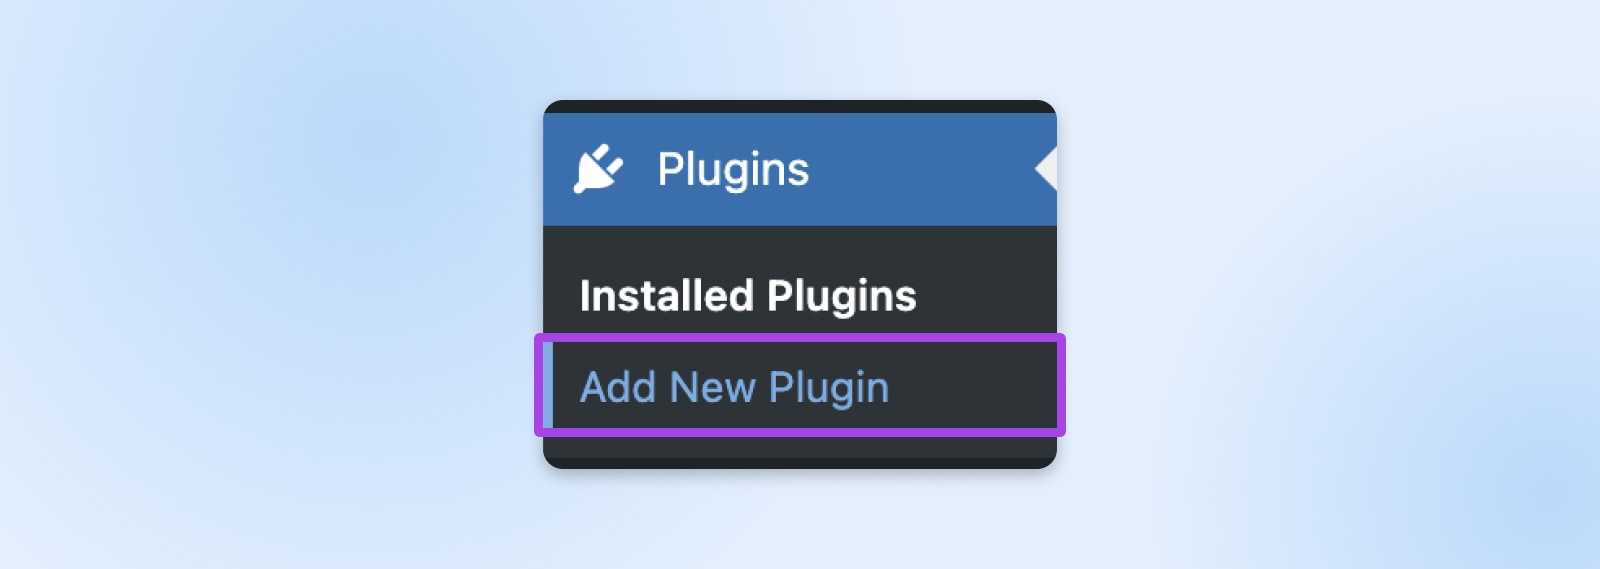 screenshot of the "add new plugin" option on a wordpress navigation menu